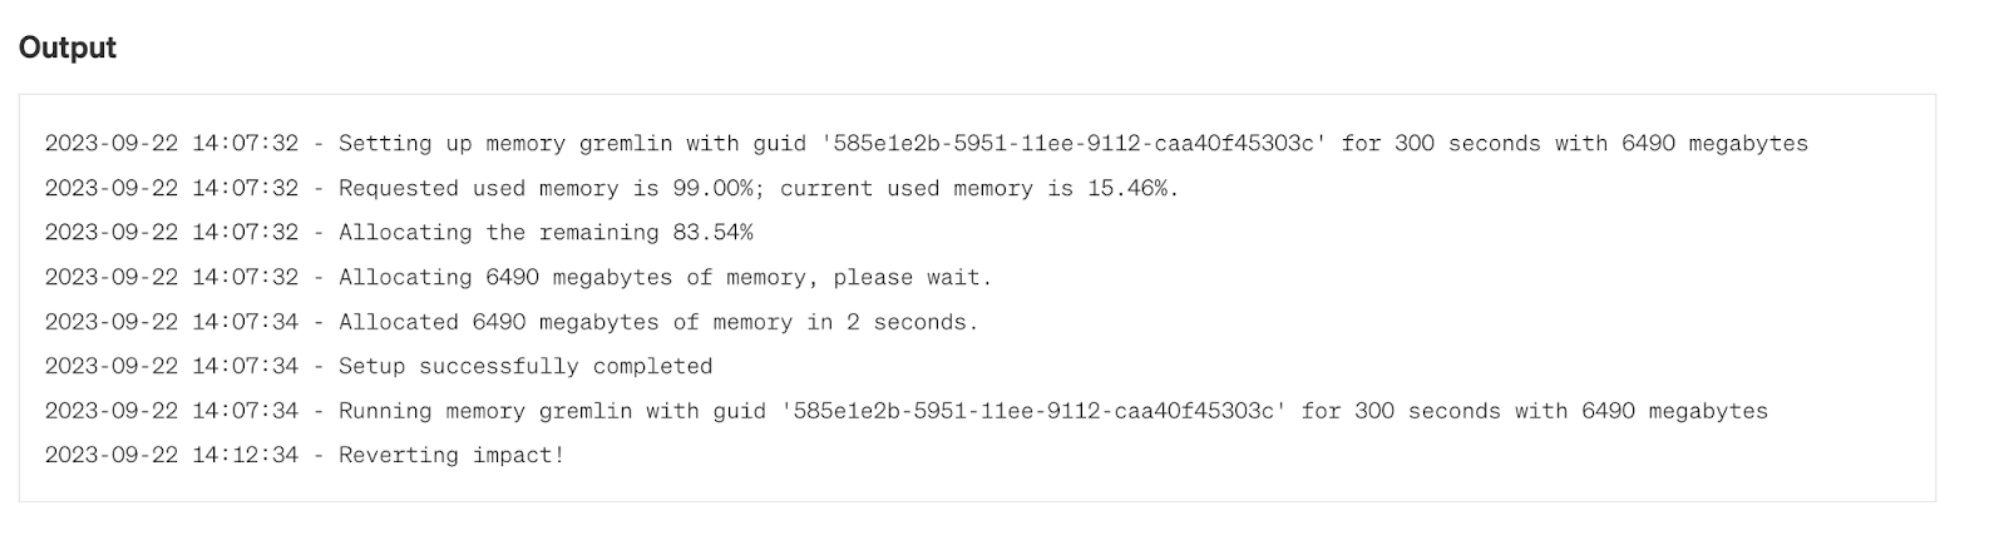 Memory usage output